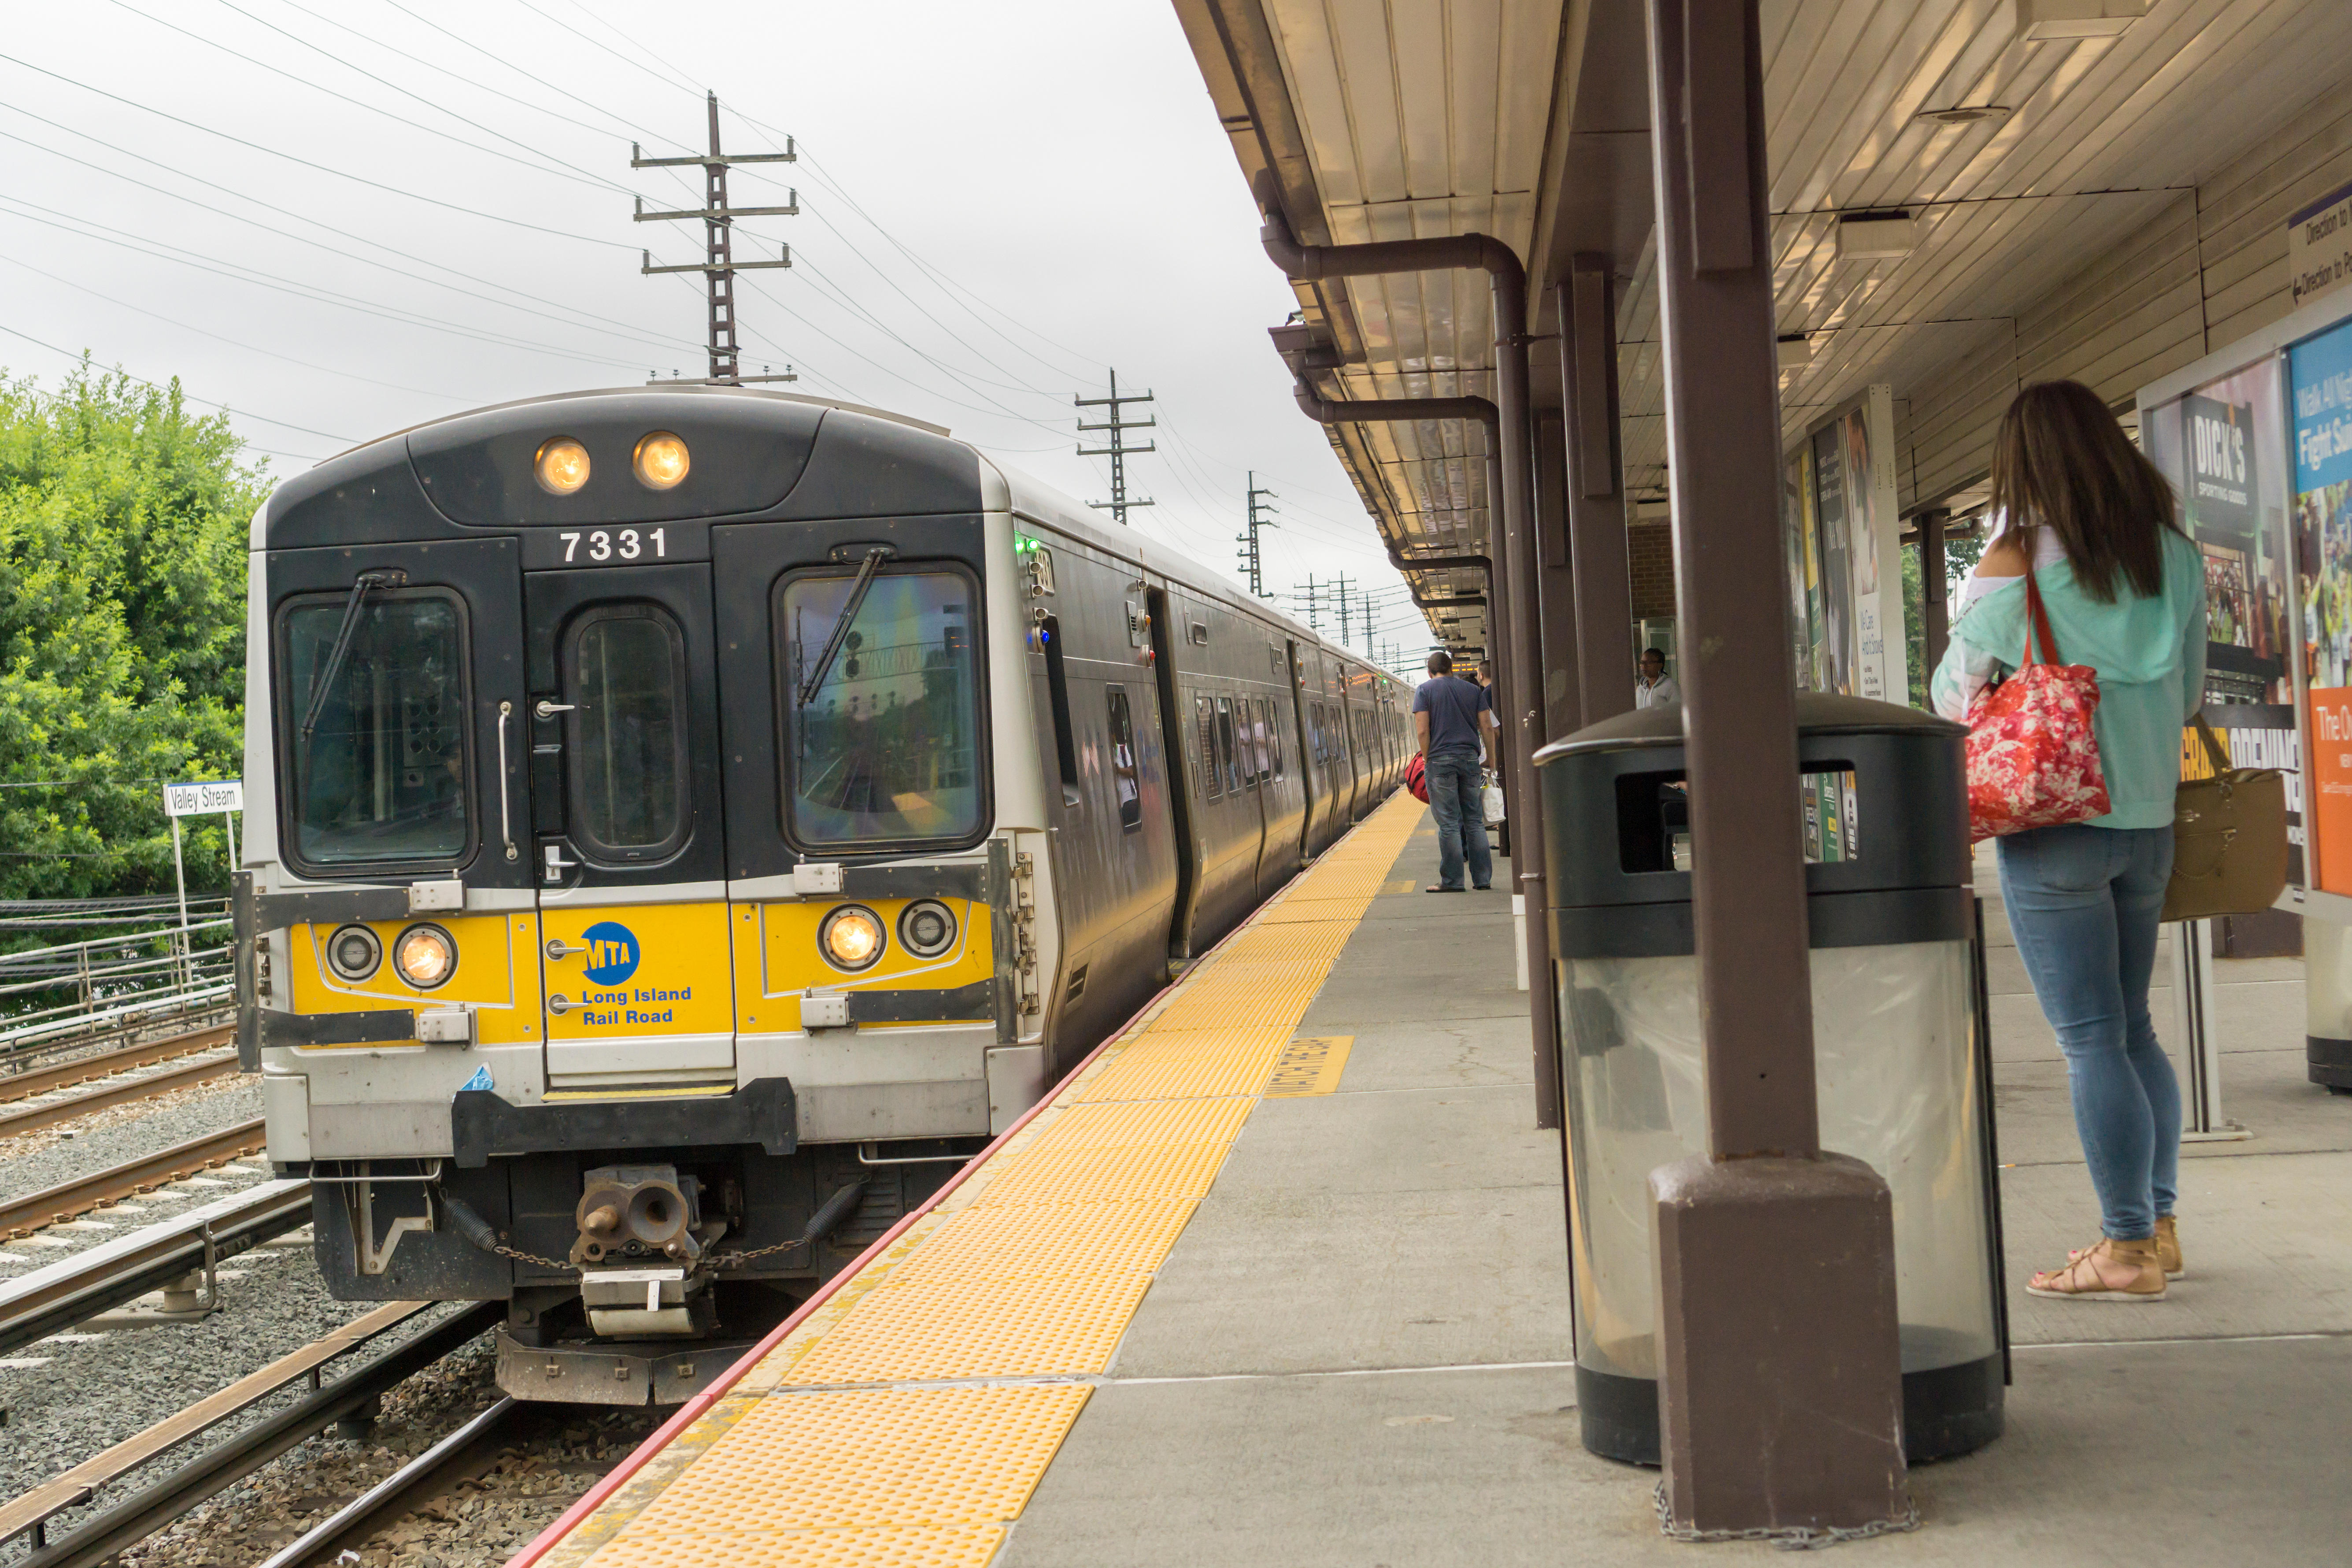 A Long Island Railroad (LIRR) commuter train arrives at the Valley Stream, Long Island station on Saturday, July 9, 2016. (Â© Richard B. Levine)